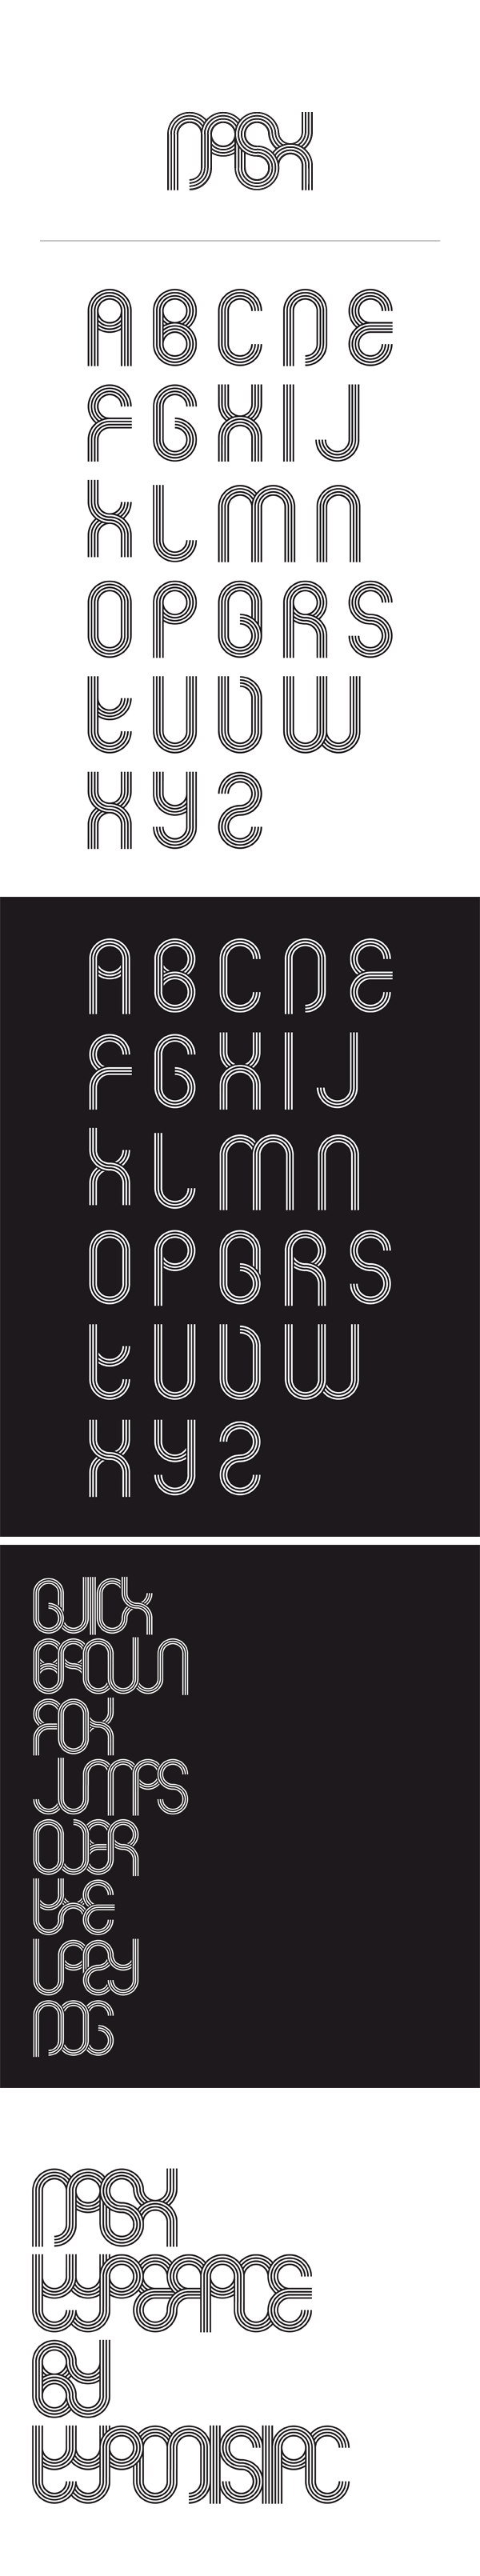 Dash Typeface font modular geometric pattern poster typodisiac